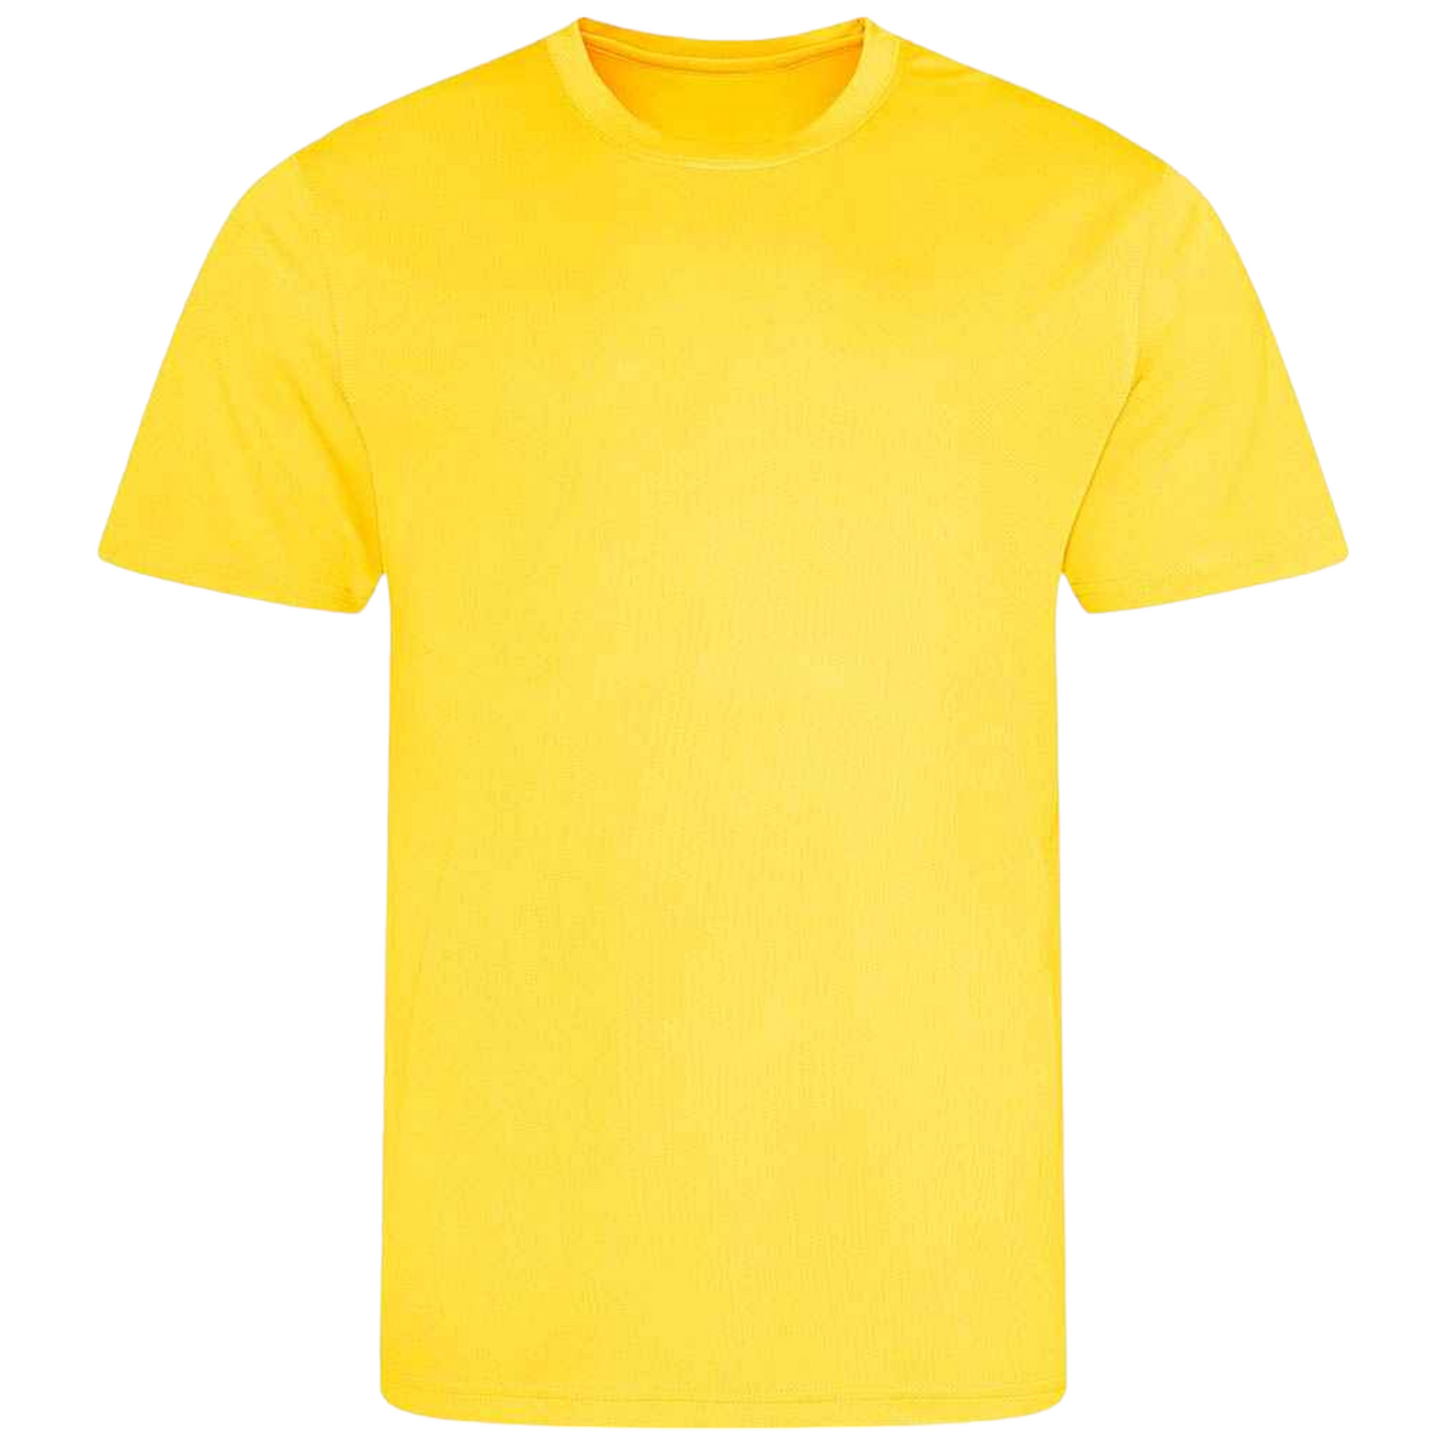 AWDis Cool T-Shirt Male Fit